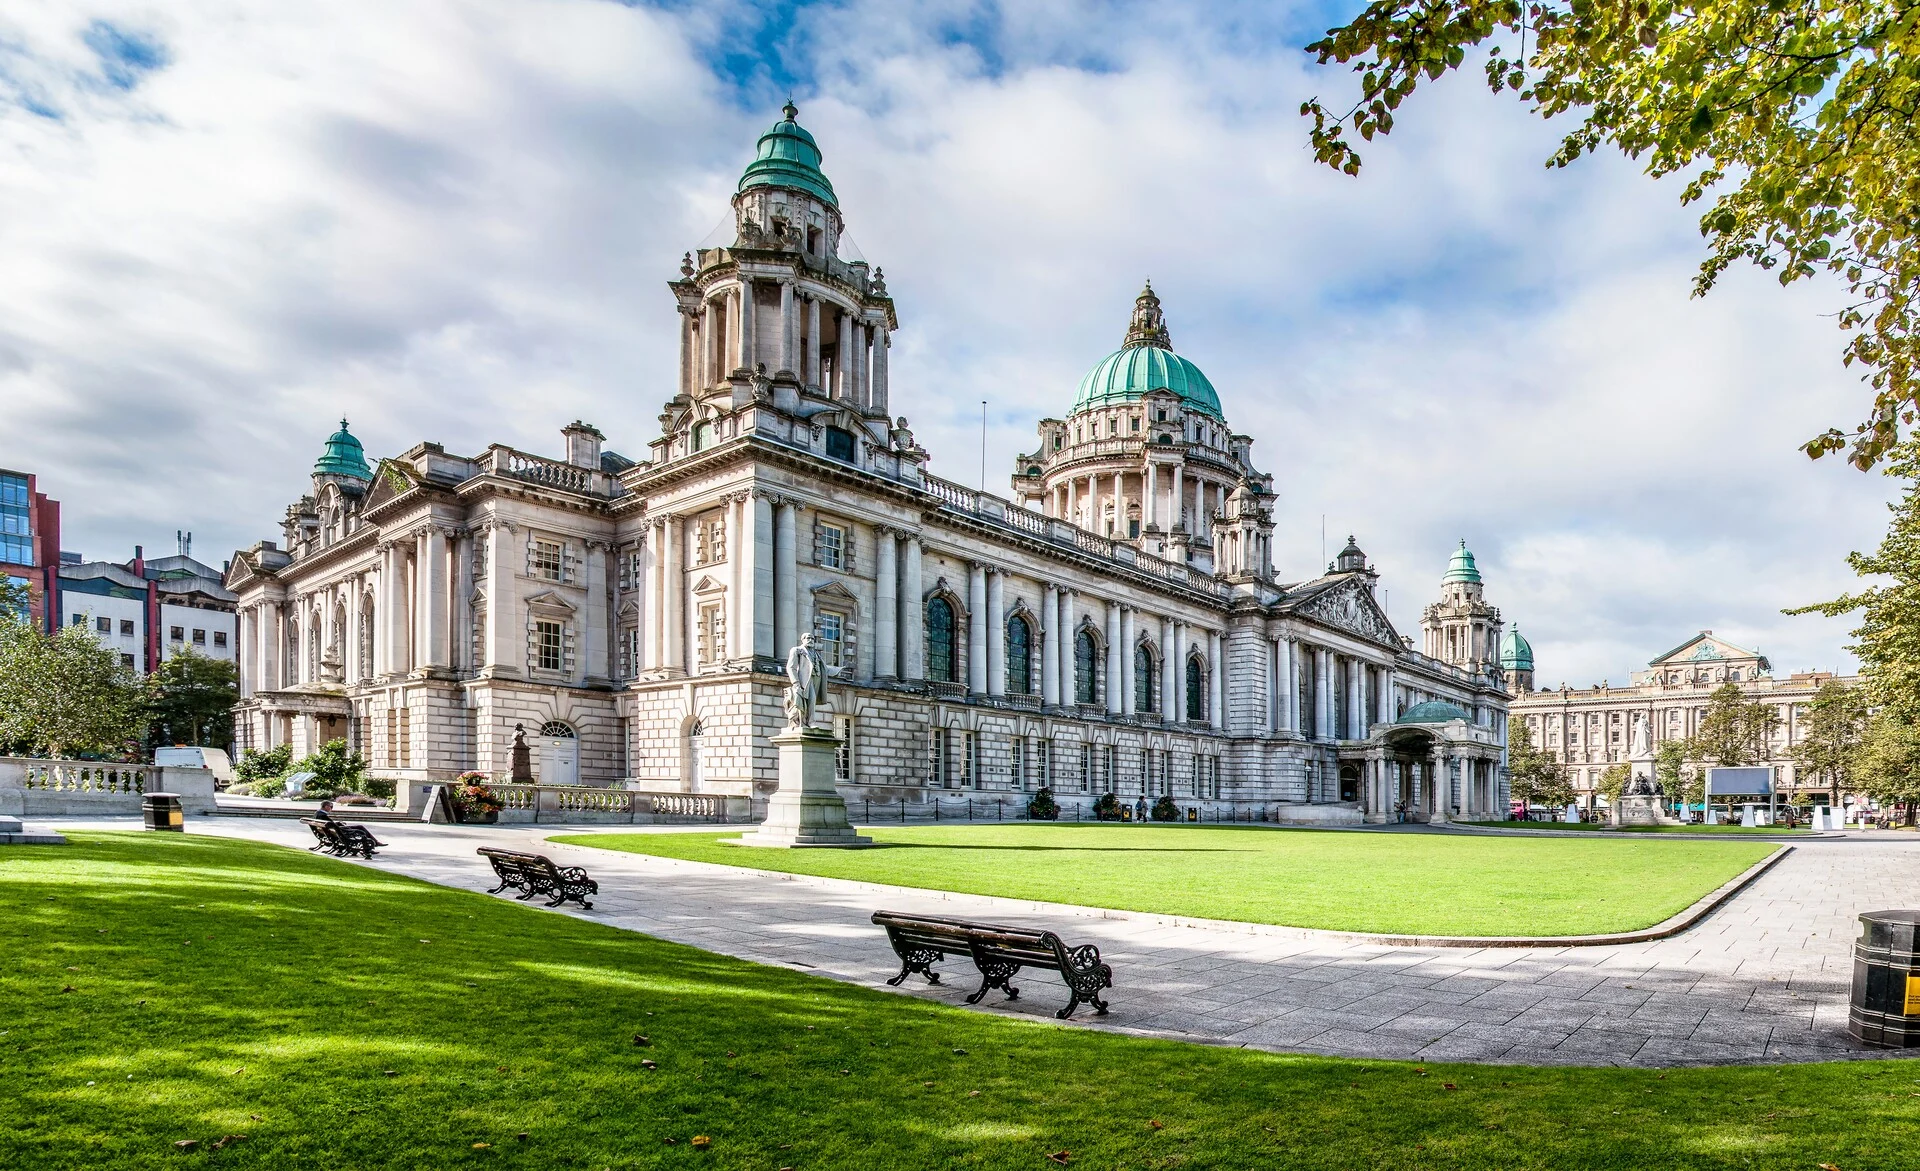  Belfast City Hall. Credit: Nahlik / Shutterstock /Hurtigruten